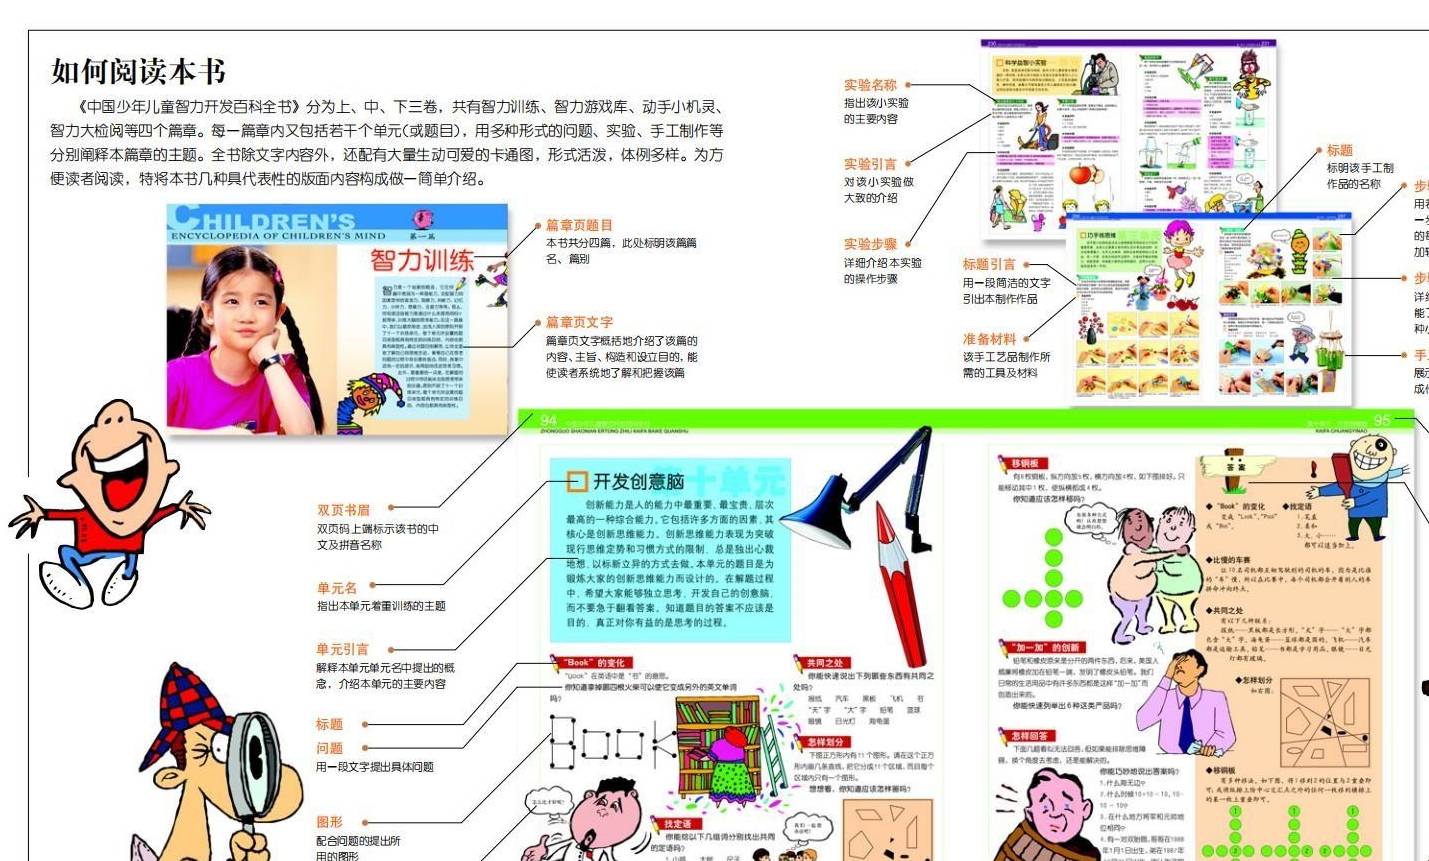 ps苹果版如何拼图:推荐一本宝藏书籍：中国少年儿童智力开发百科全书-第5张图片-太平洋在线下载